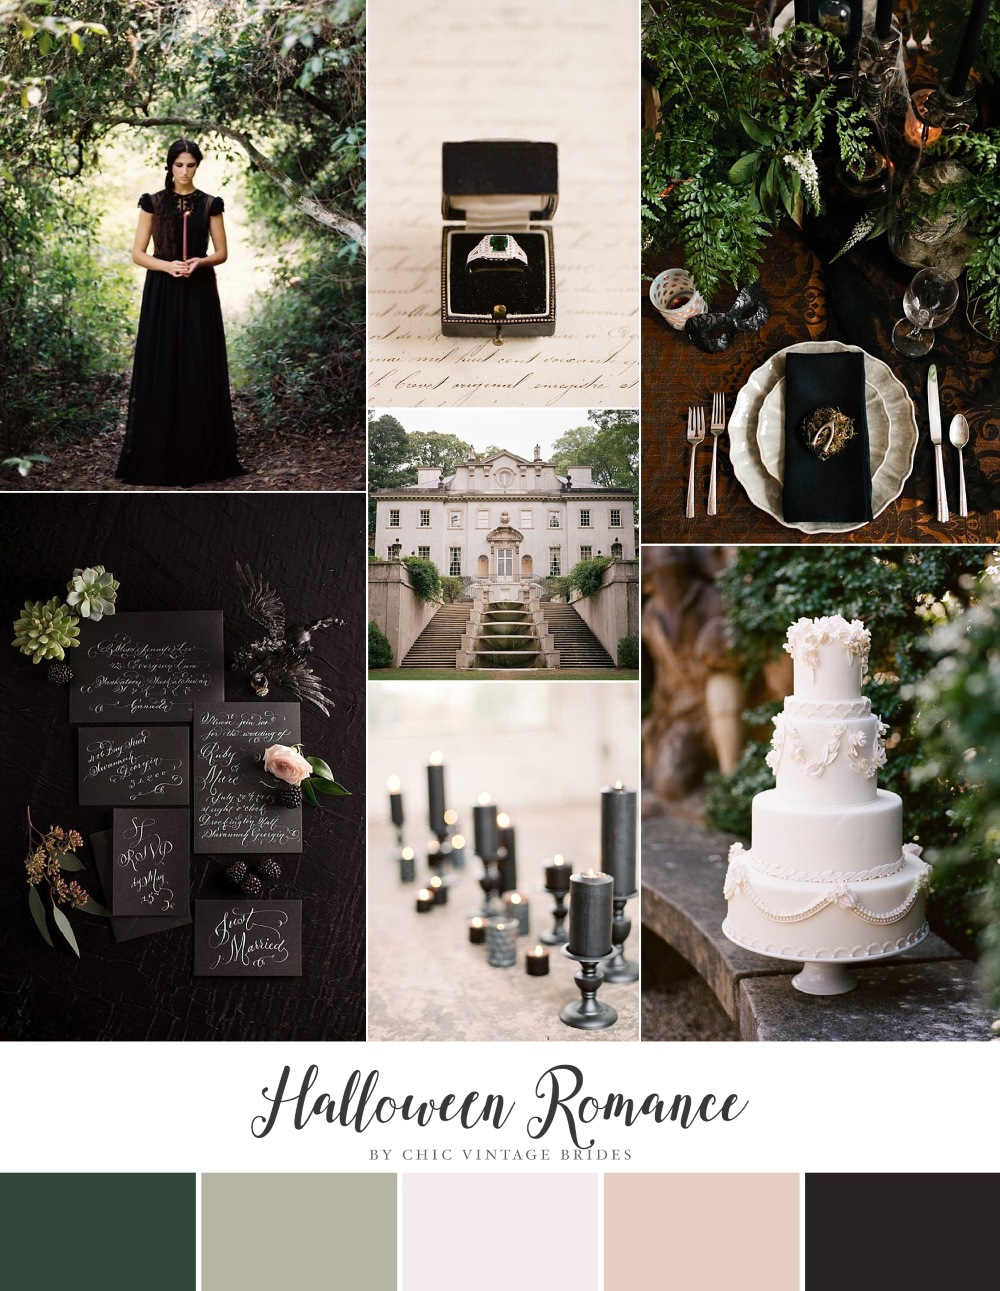 Halloween Romance - Wedding Inspiration in Black, Green & Neutrals